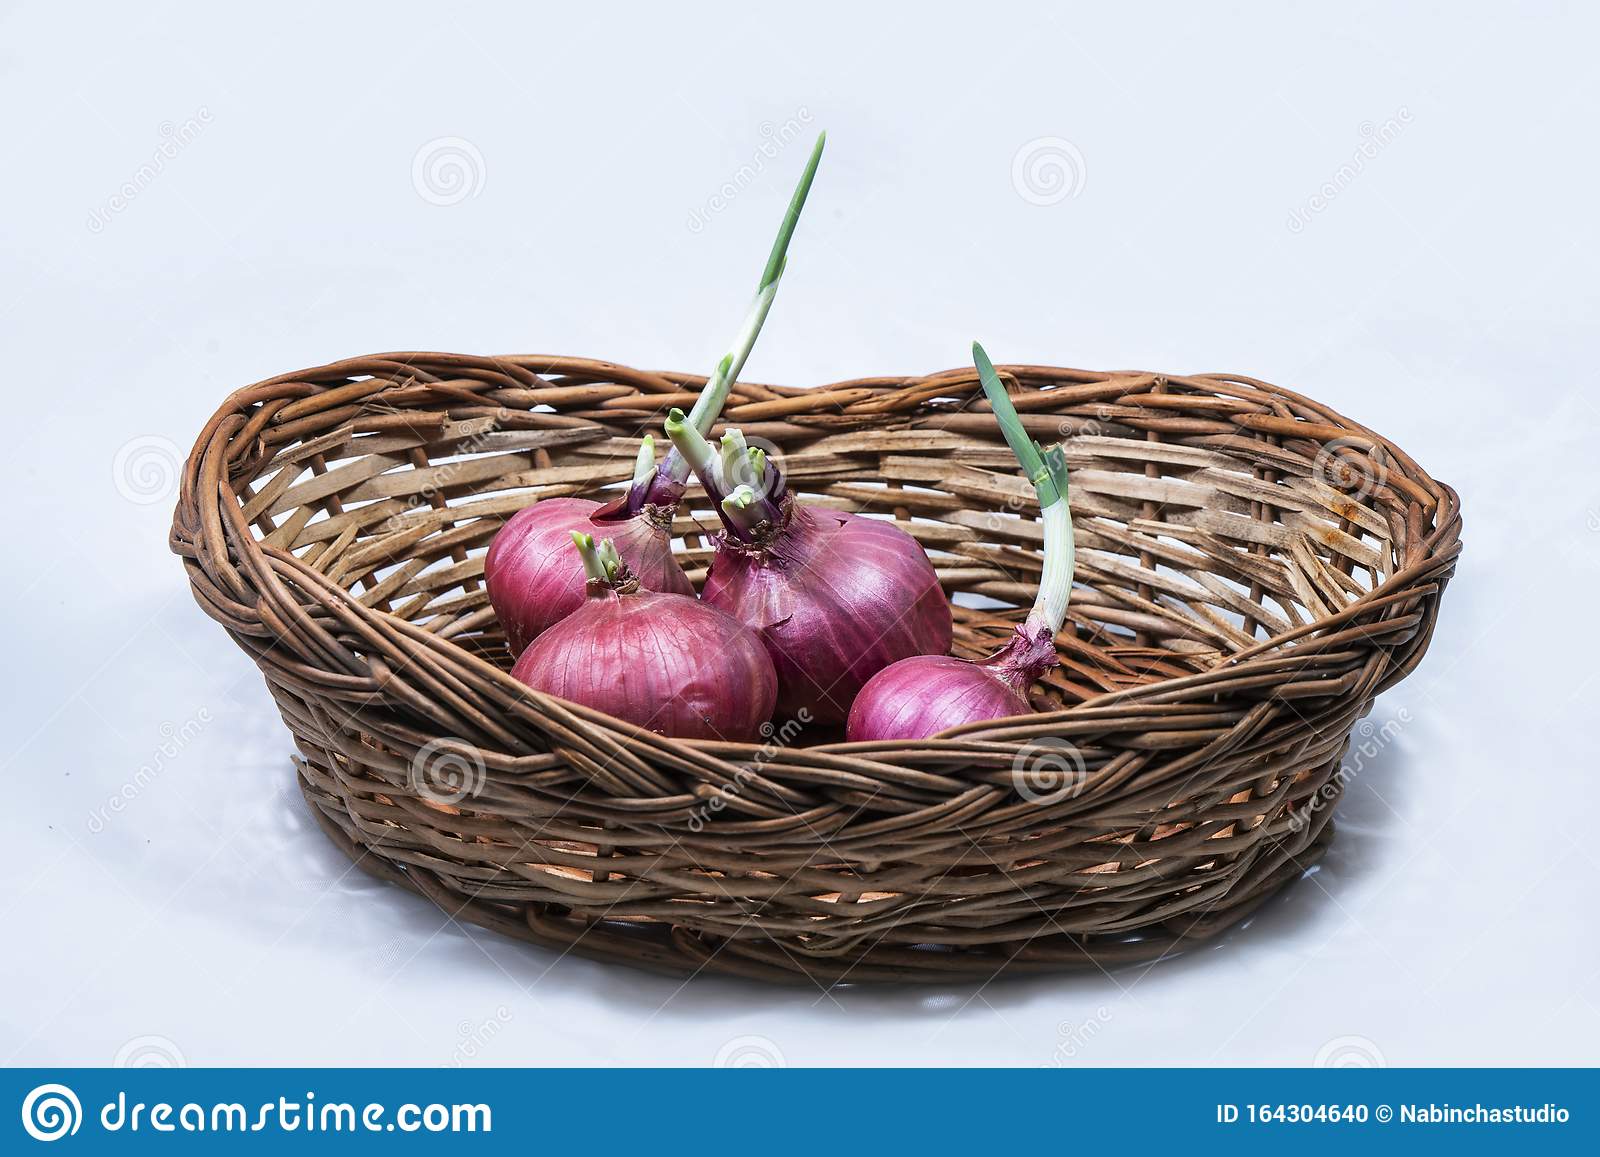 Запрещенный сайт кракен onion top